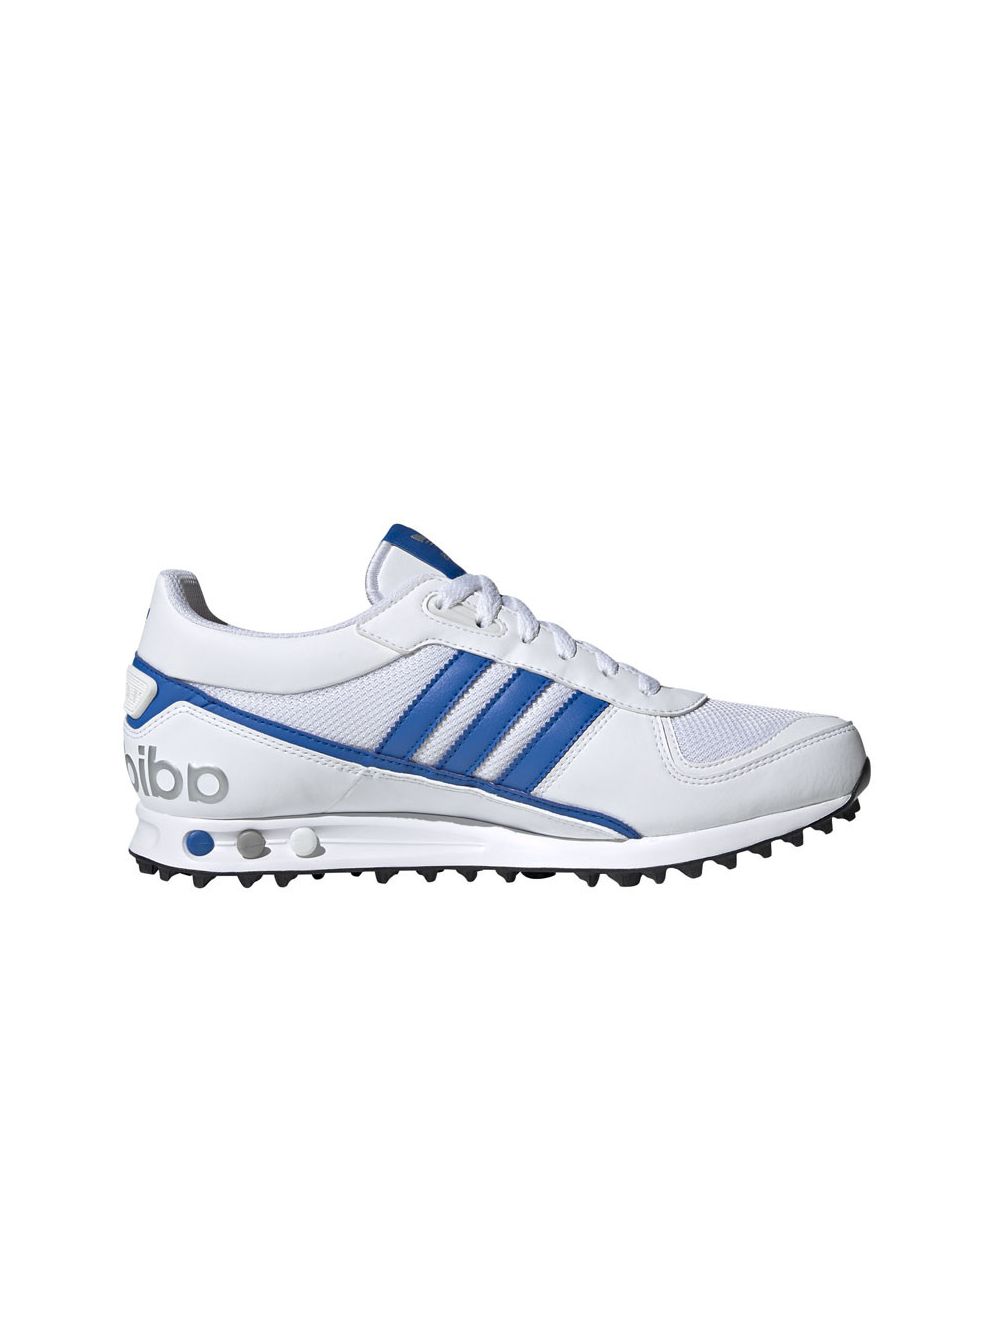 adidas la trainer white blue